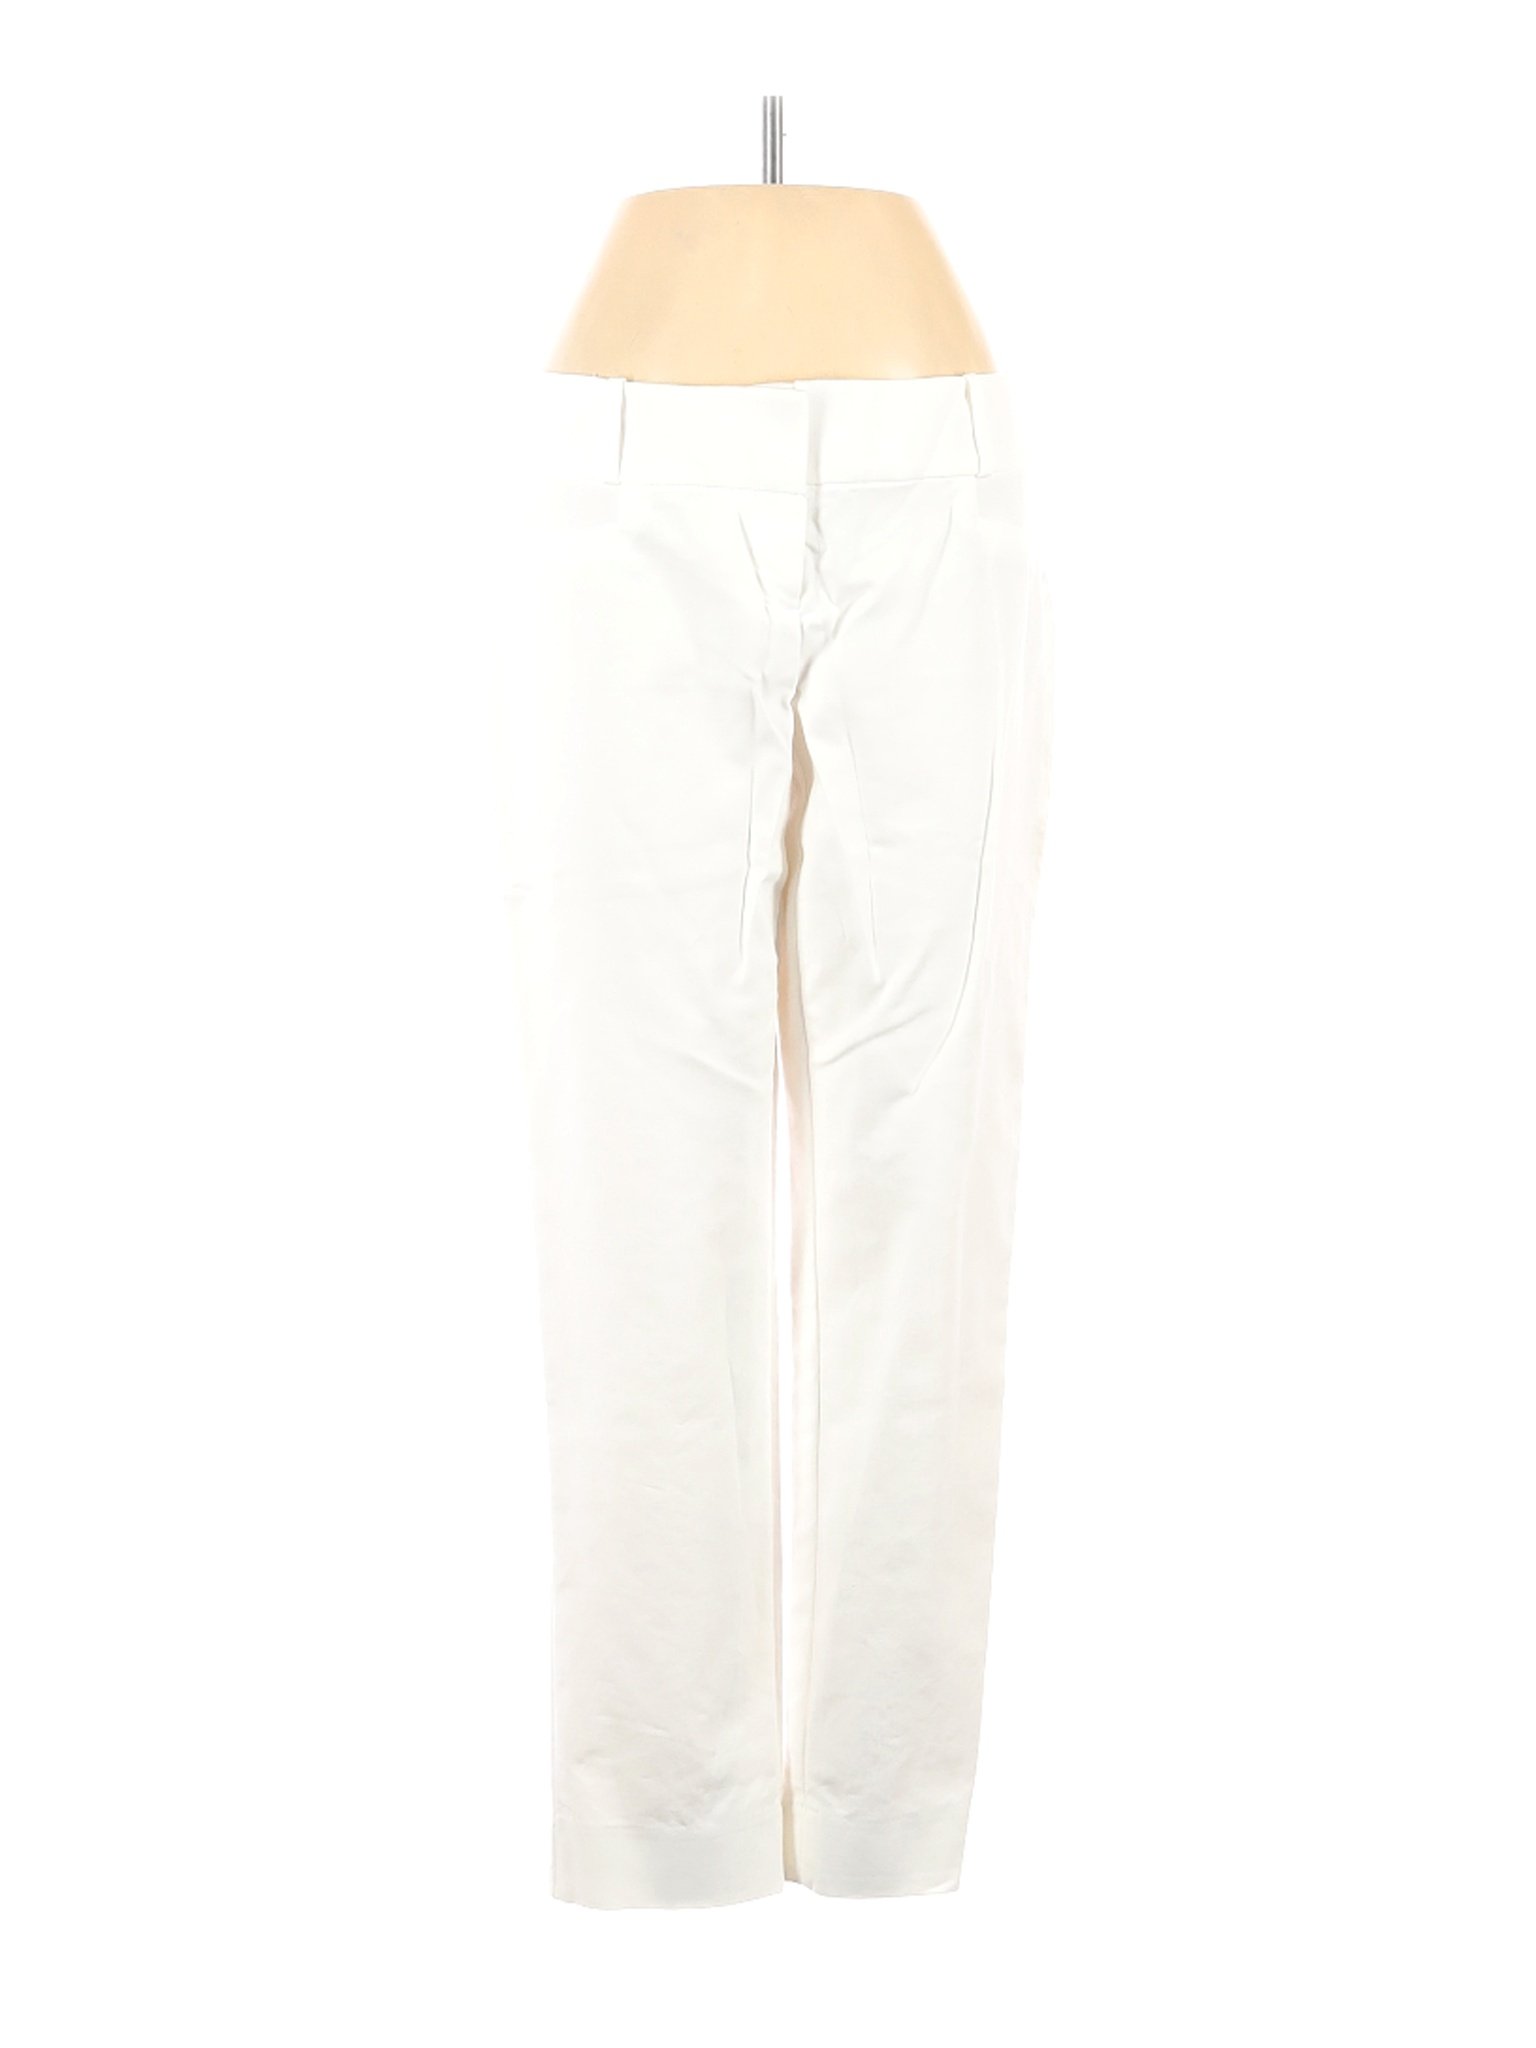 The Limited Women White Dress Pants 2 | eBay